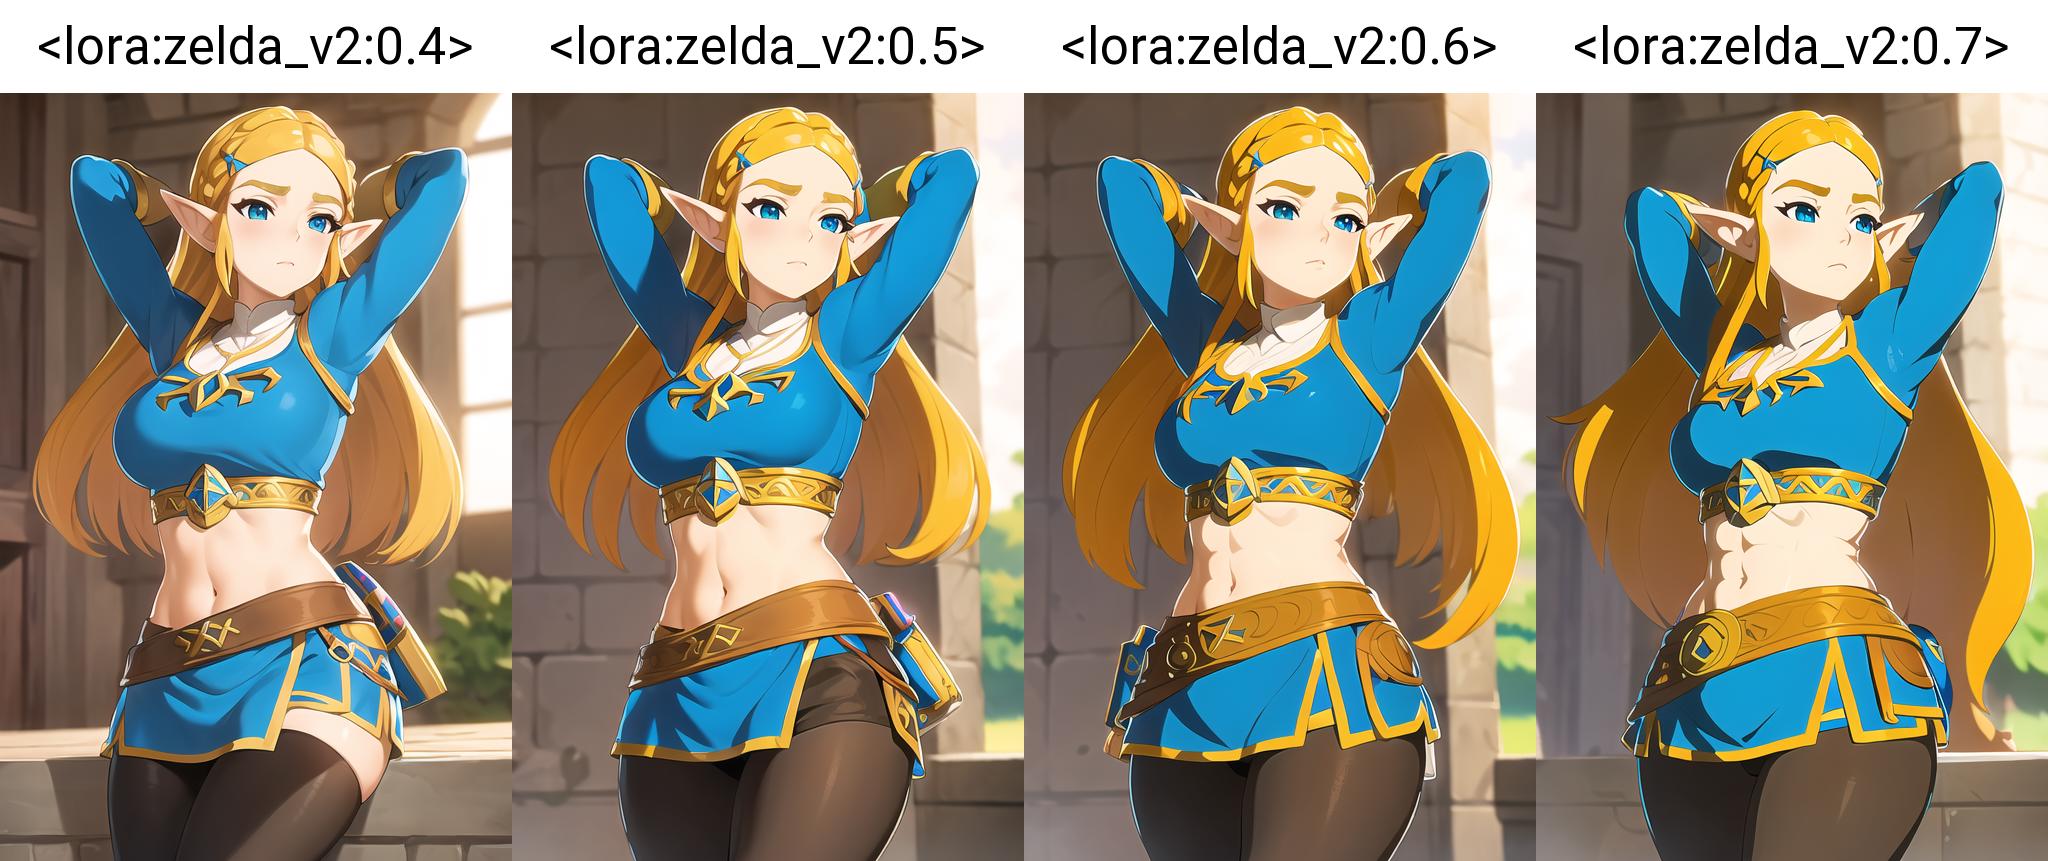 The Legend of Zelda - Princess Zelda image by 1zgame